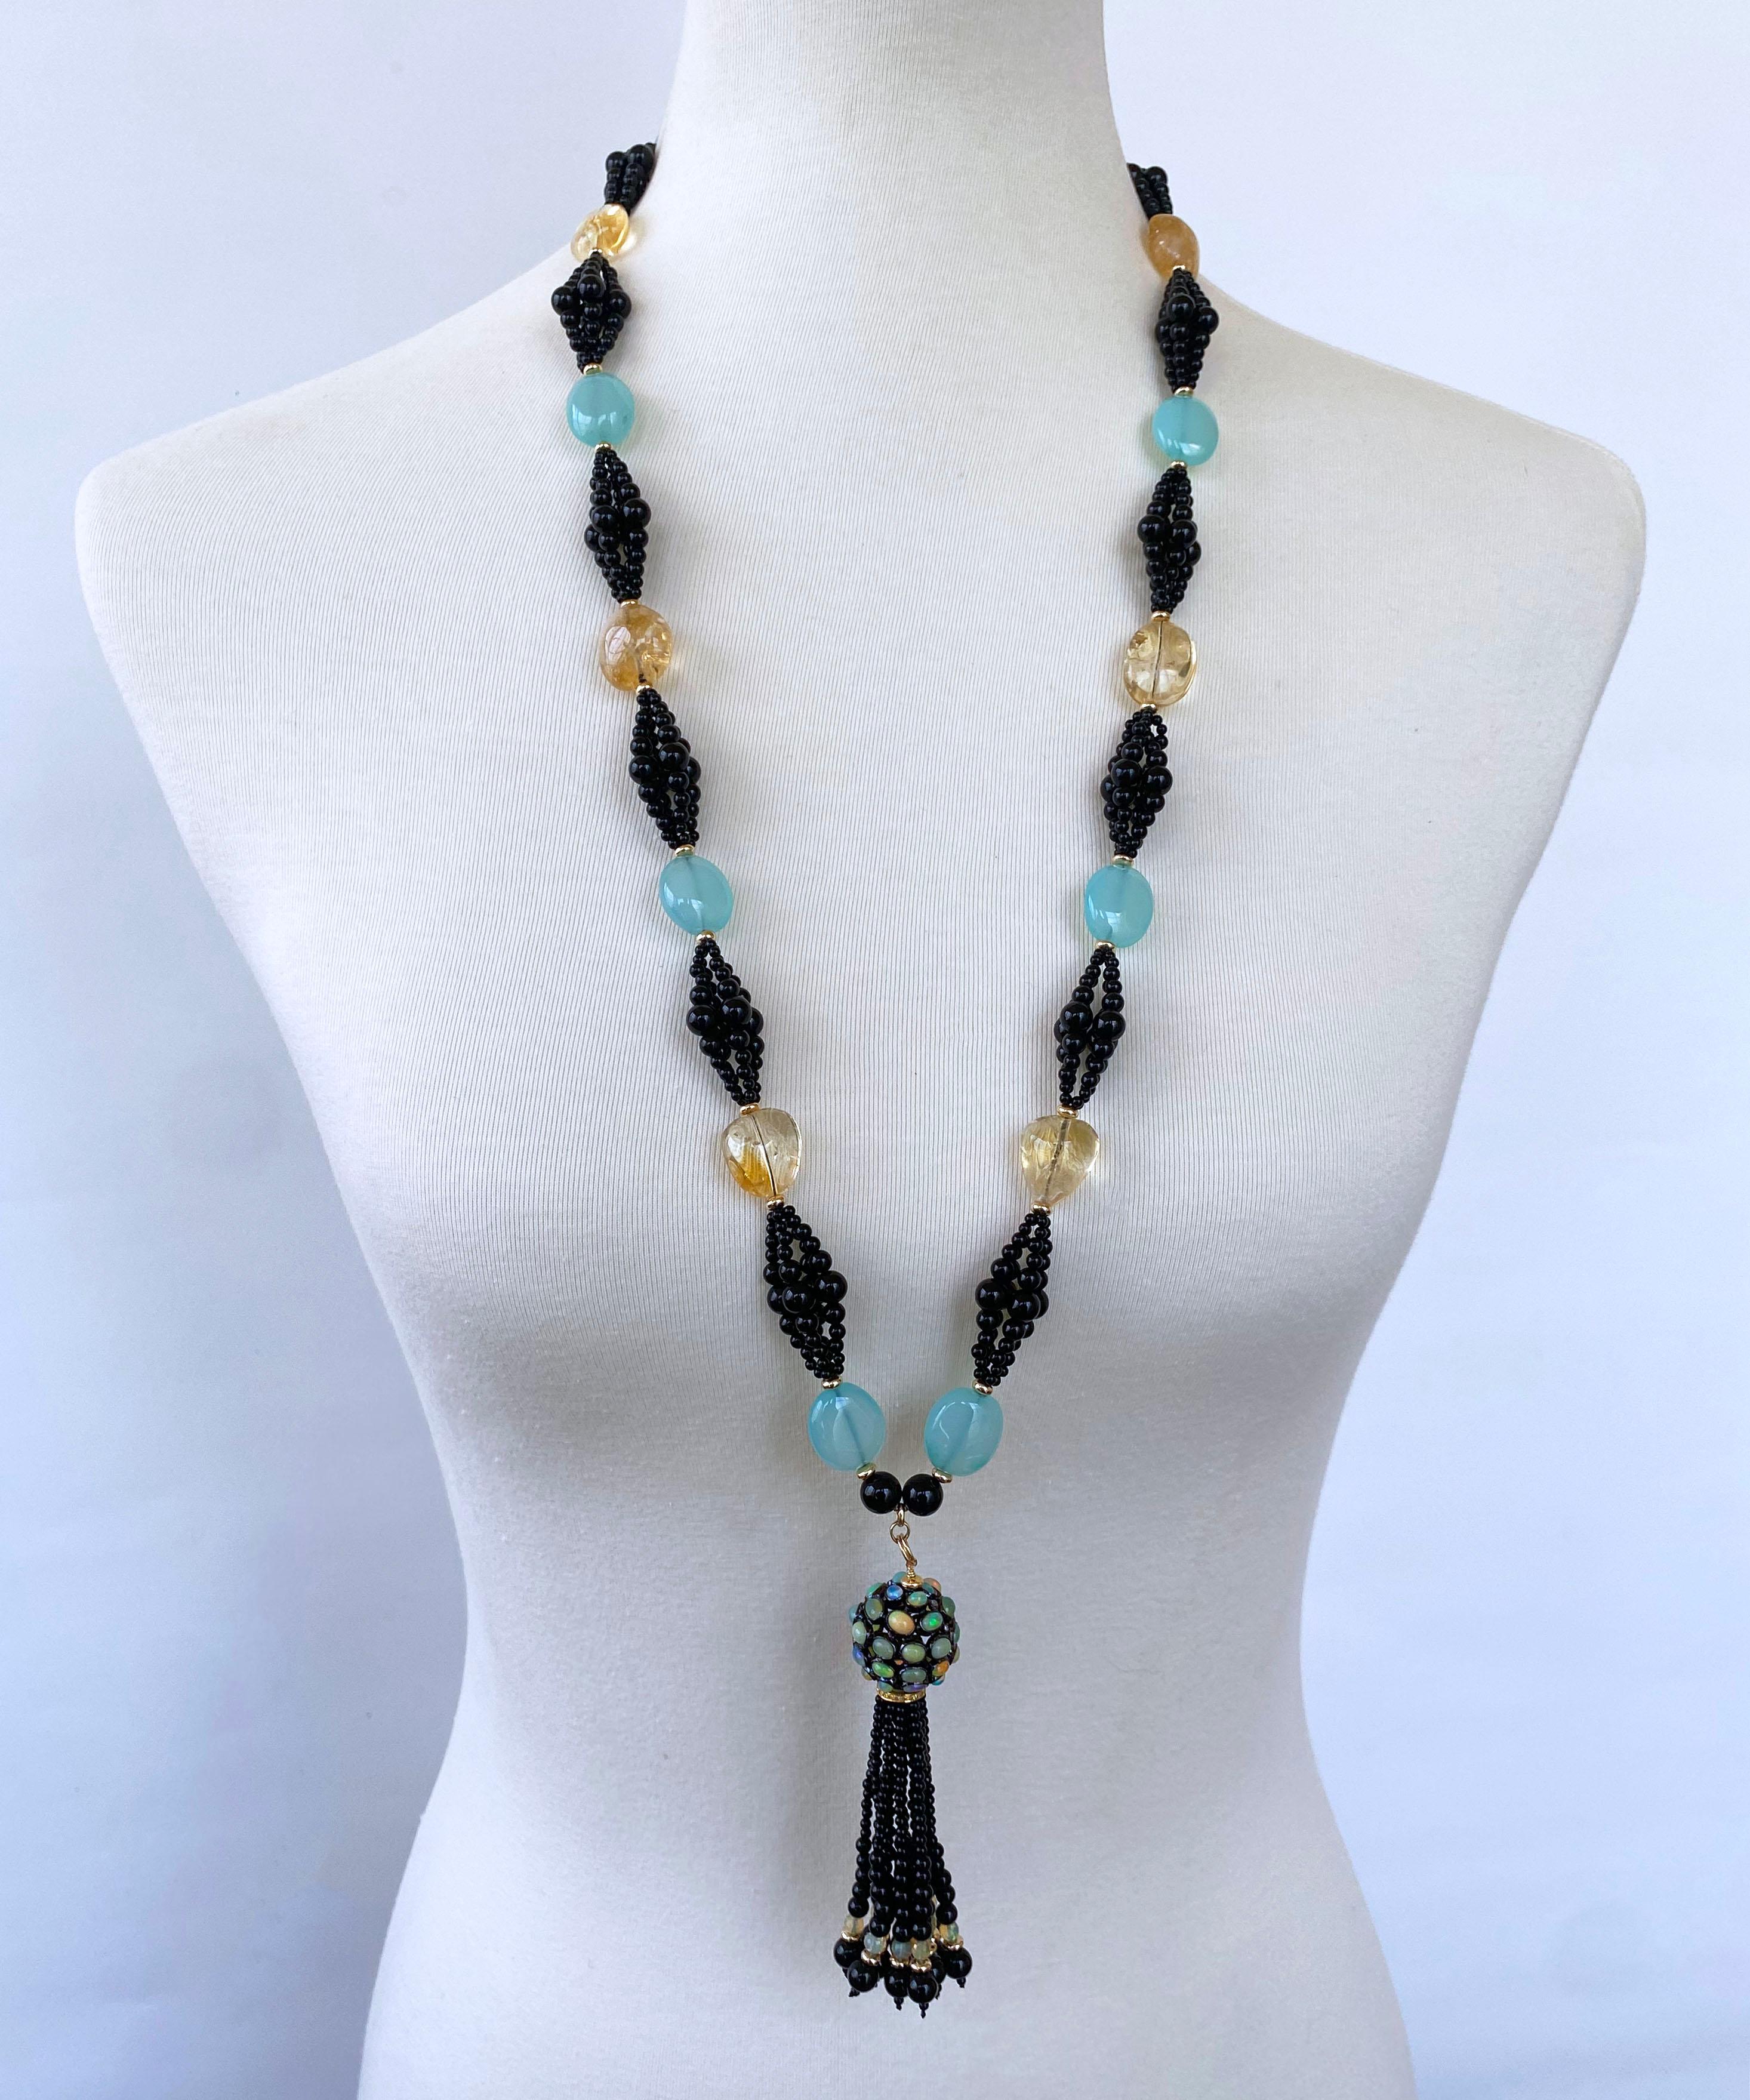 Artisan Marina J. Black Onyx, Chalcedony, Citrine & Gold Cluster Necklace with Tassel